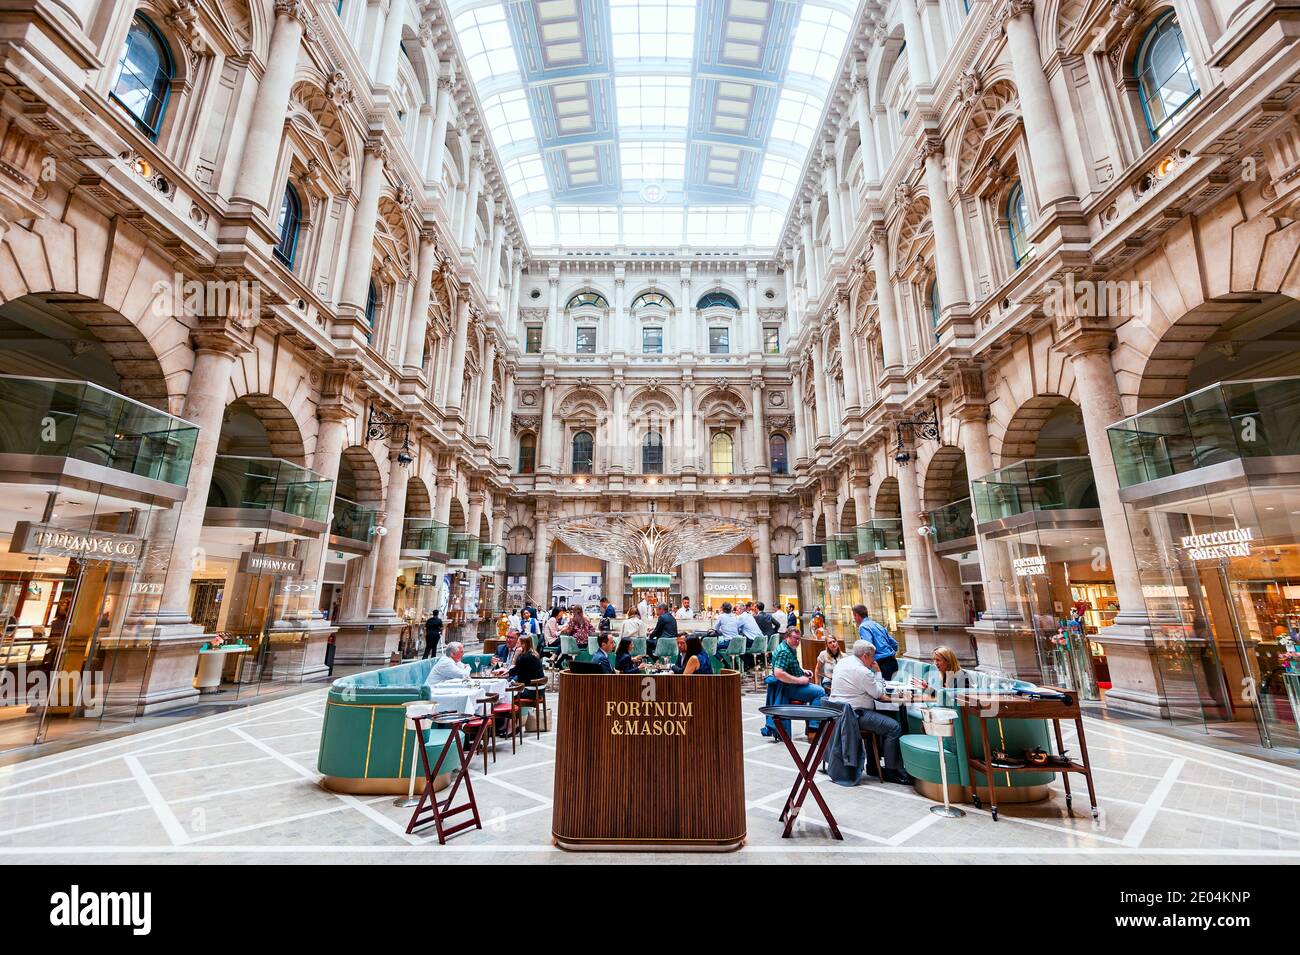 Fortnum & Mason at the Royal Exchange, London, England. Stock Photo